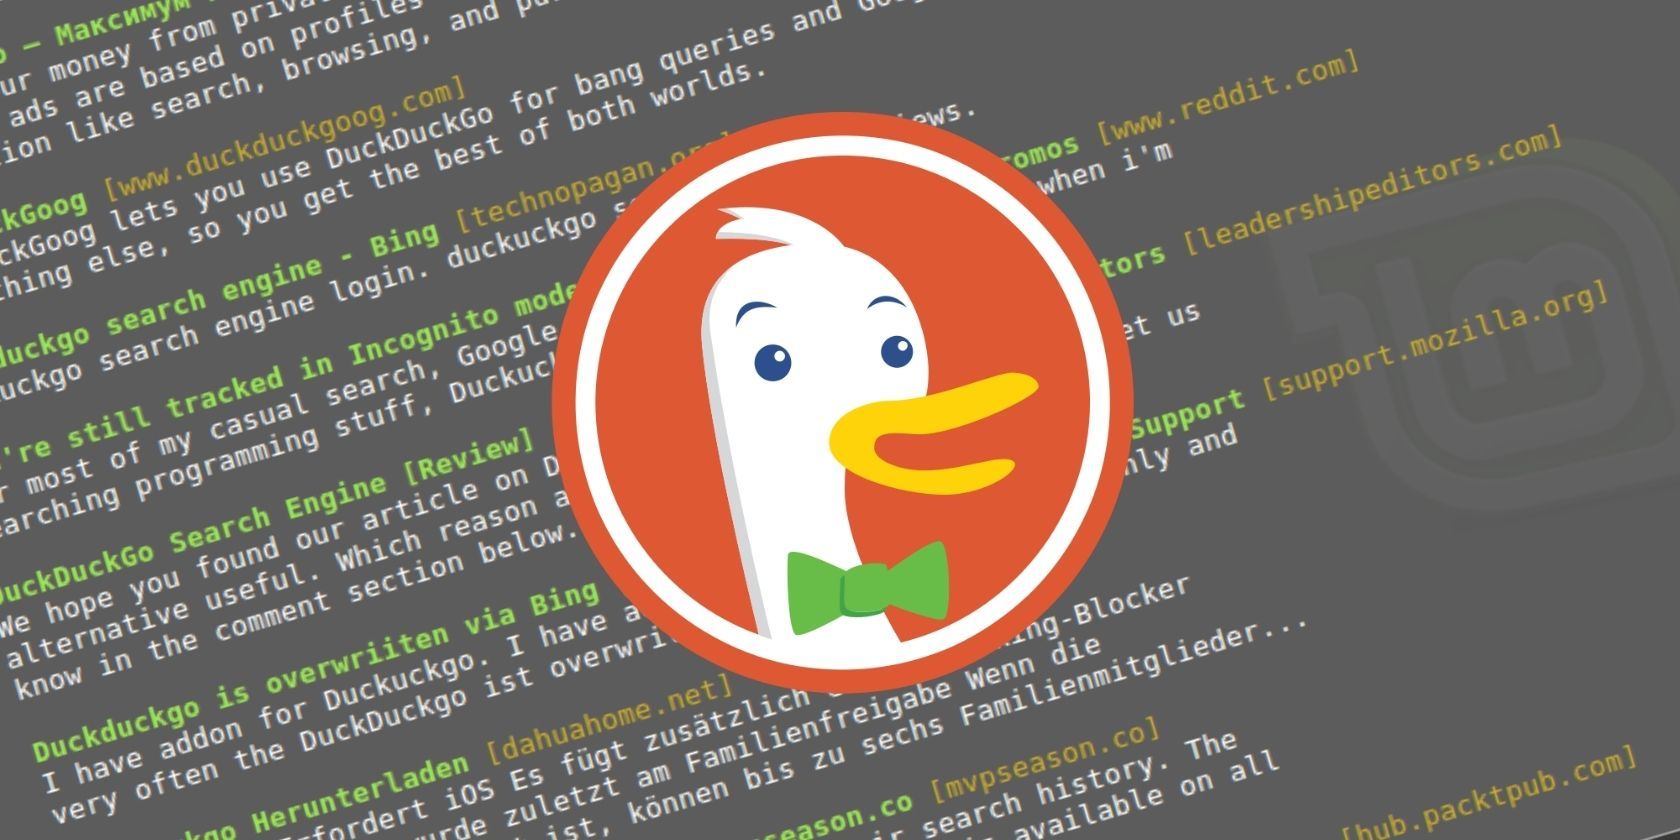 ddgr: DuckDuckGo.search from terminal